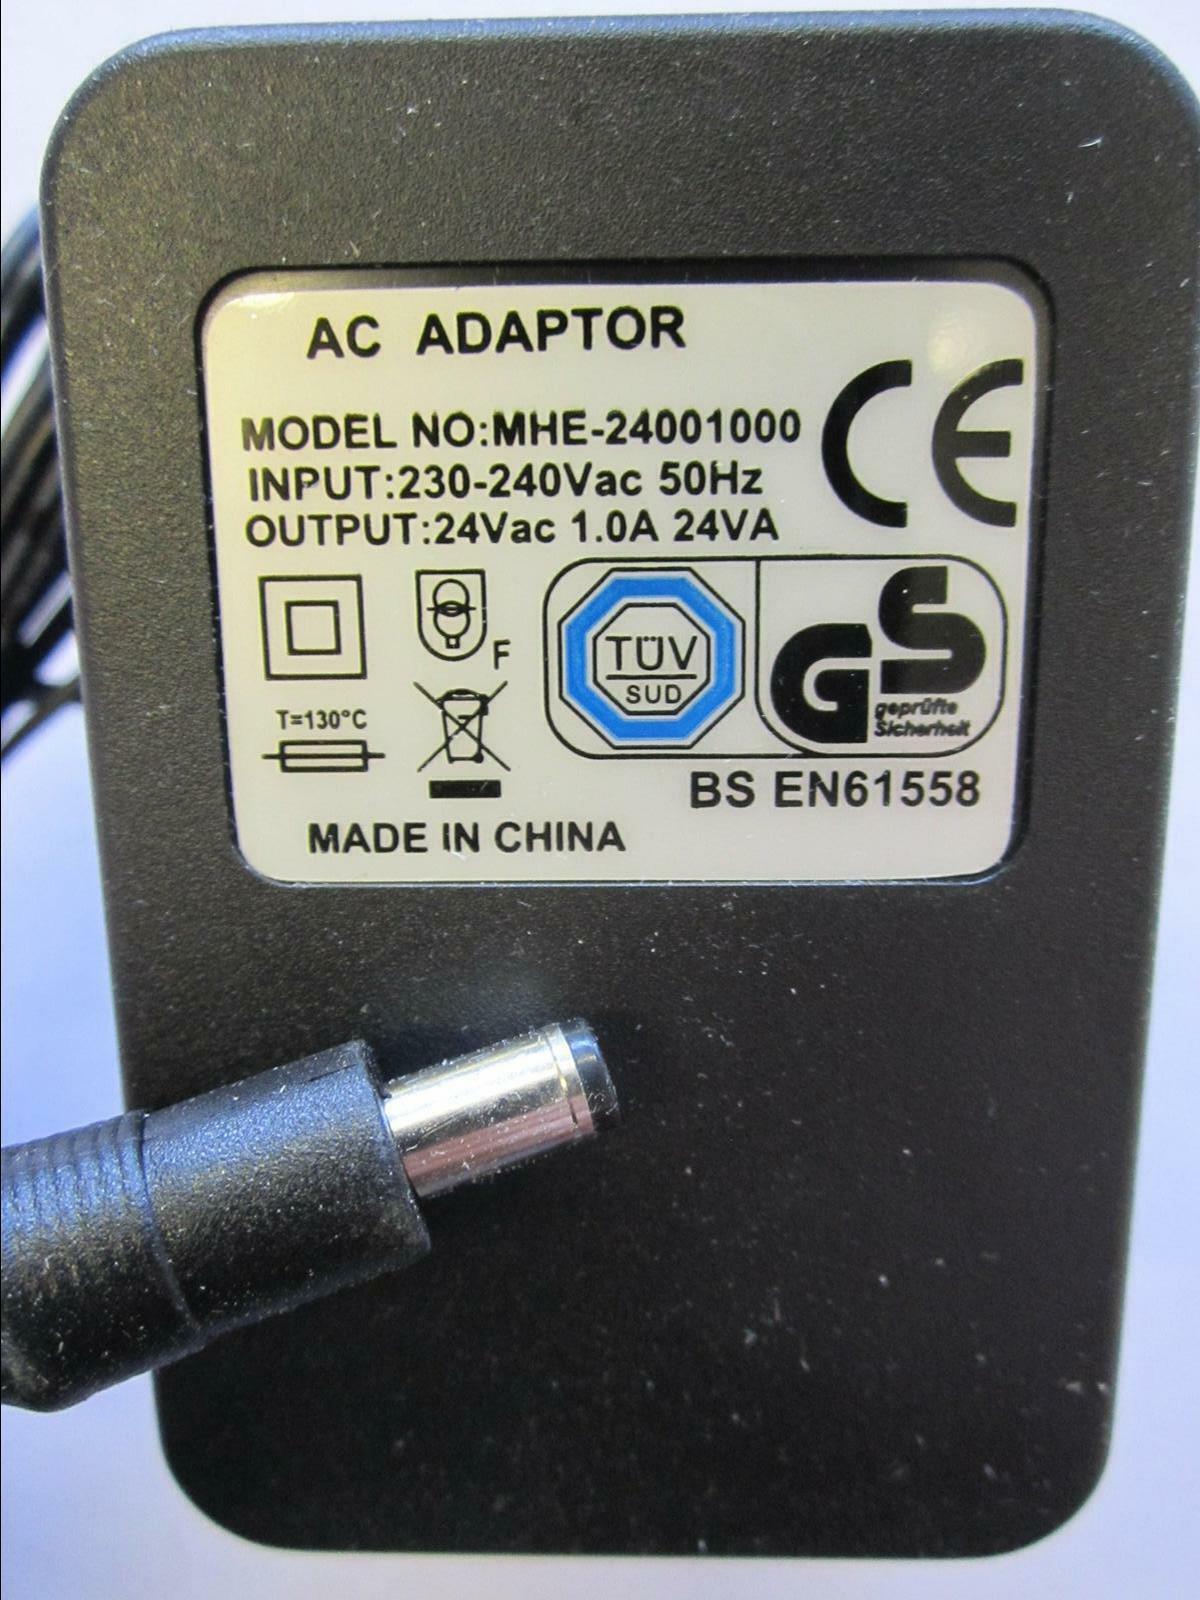 24V AC-AC ADAPTOR 1A 24VAC 1000mA POWER SUPPLY TRANSFORMER for MHB-24001000 Type Power Adapter Max. Output Power 24VA V